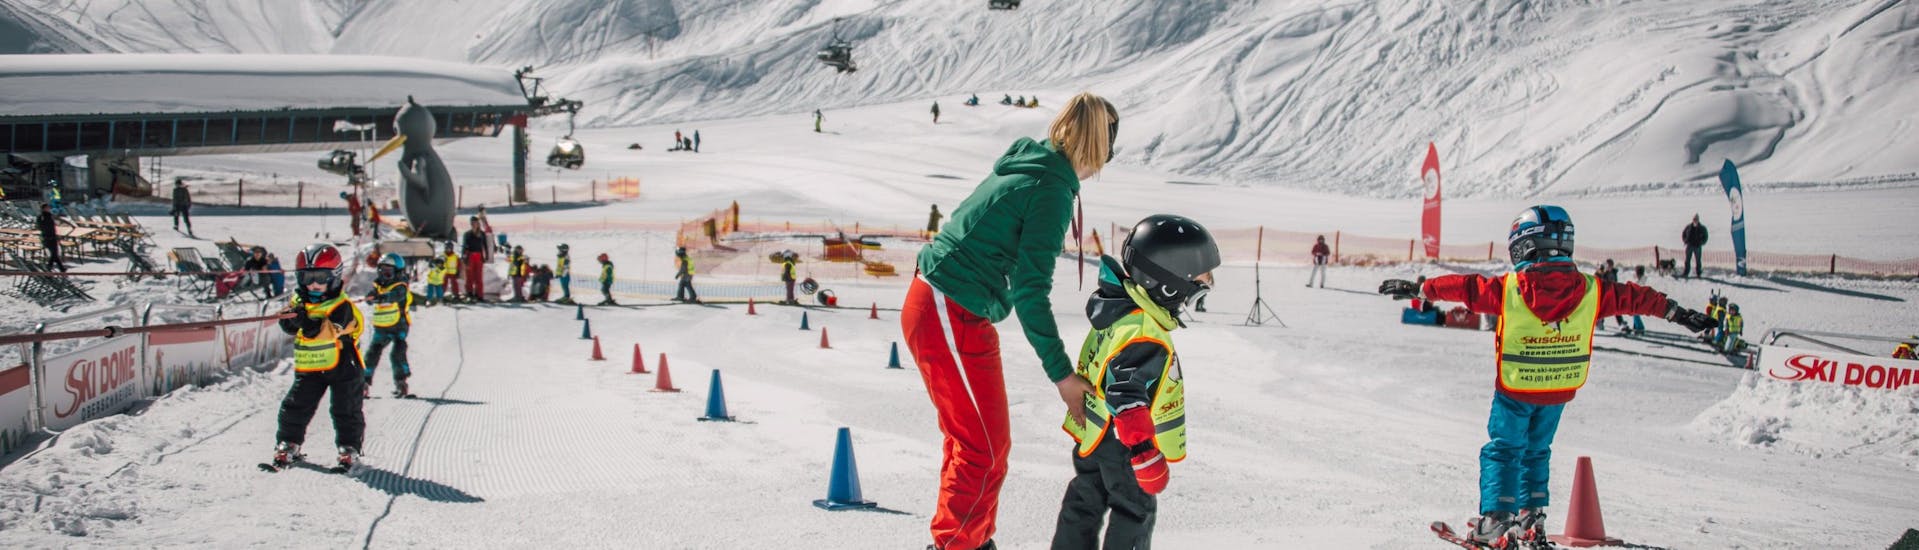 Clases de esquí para niños a partir de 4 años para debutantes con Skischule Ski Dome Oberschneider Kaprun.